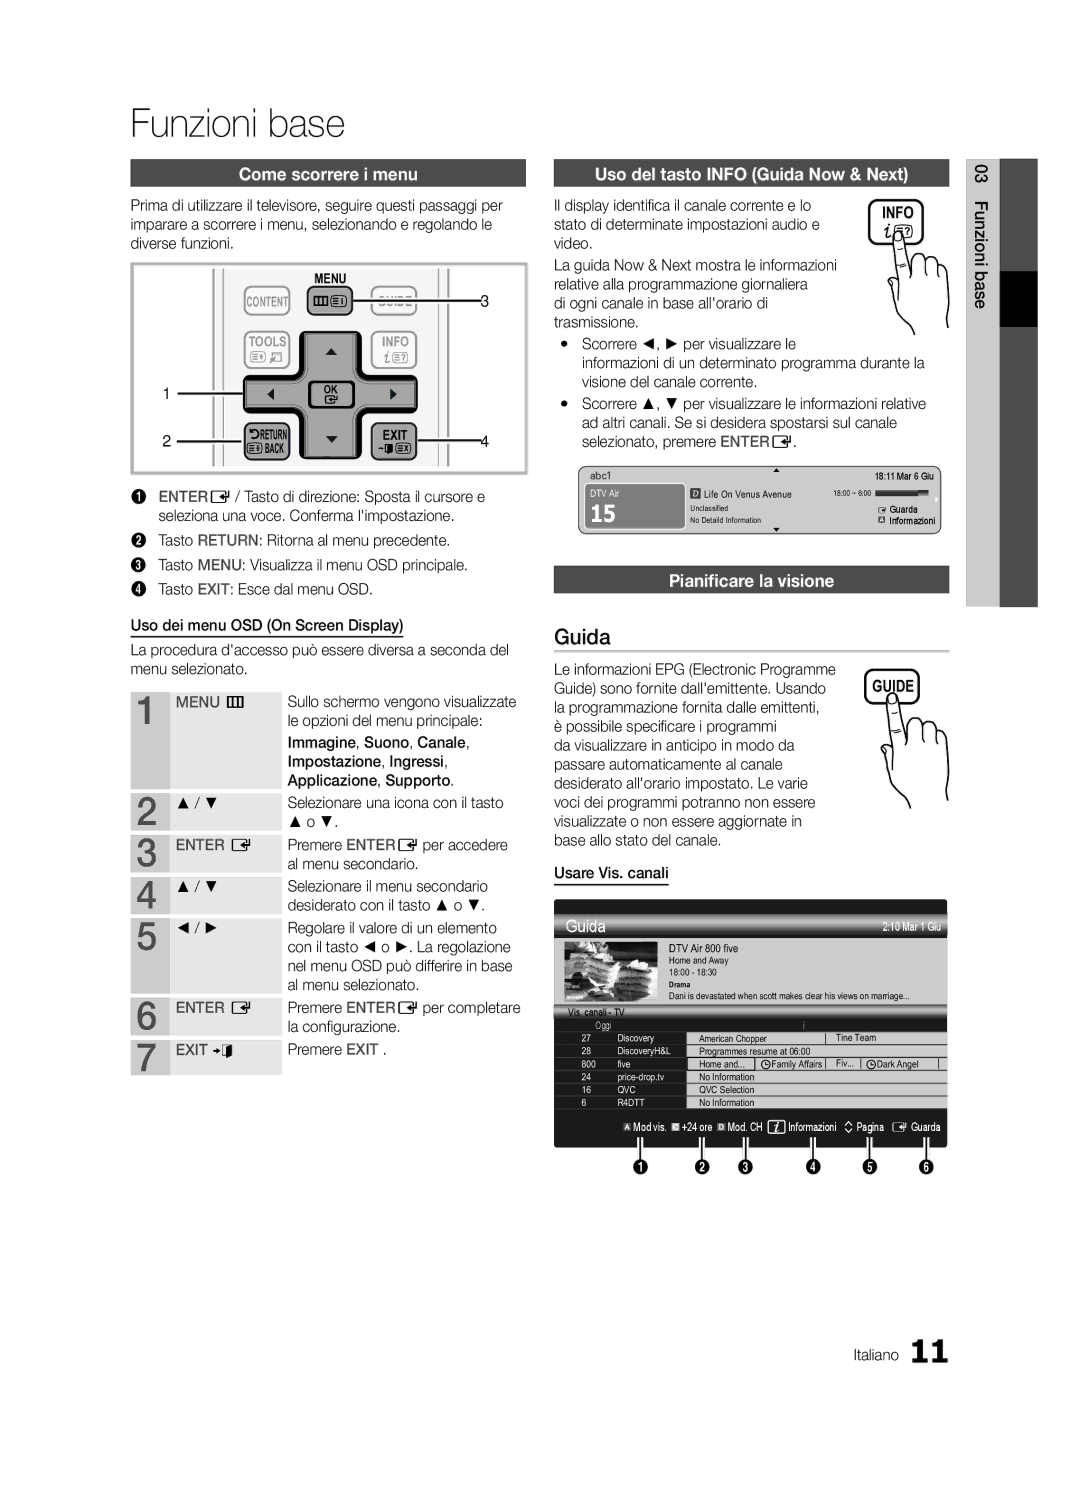 Samsung UE55C6500UPXZT, UE46C6500UPXZT manual Funzioni base, Come scorrere i menu, Uso del tasto Info Guida Now & Next 